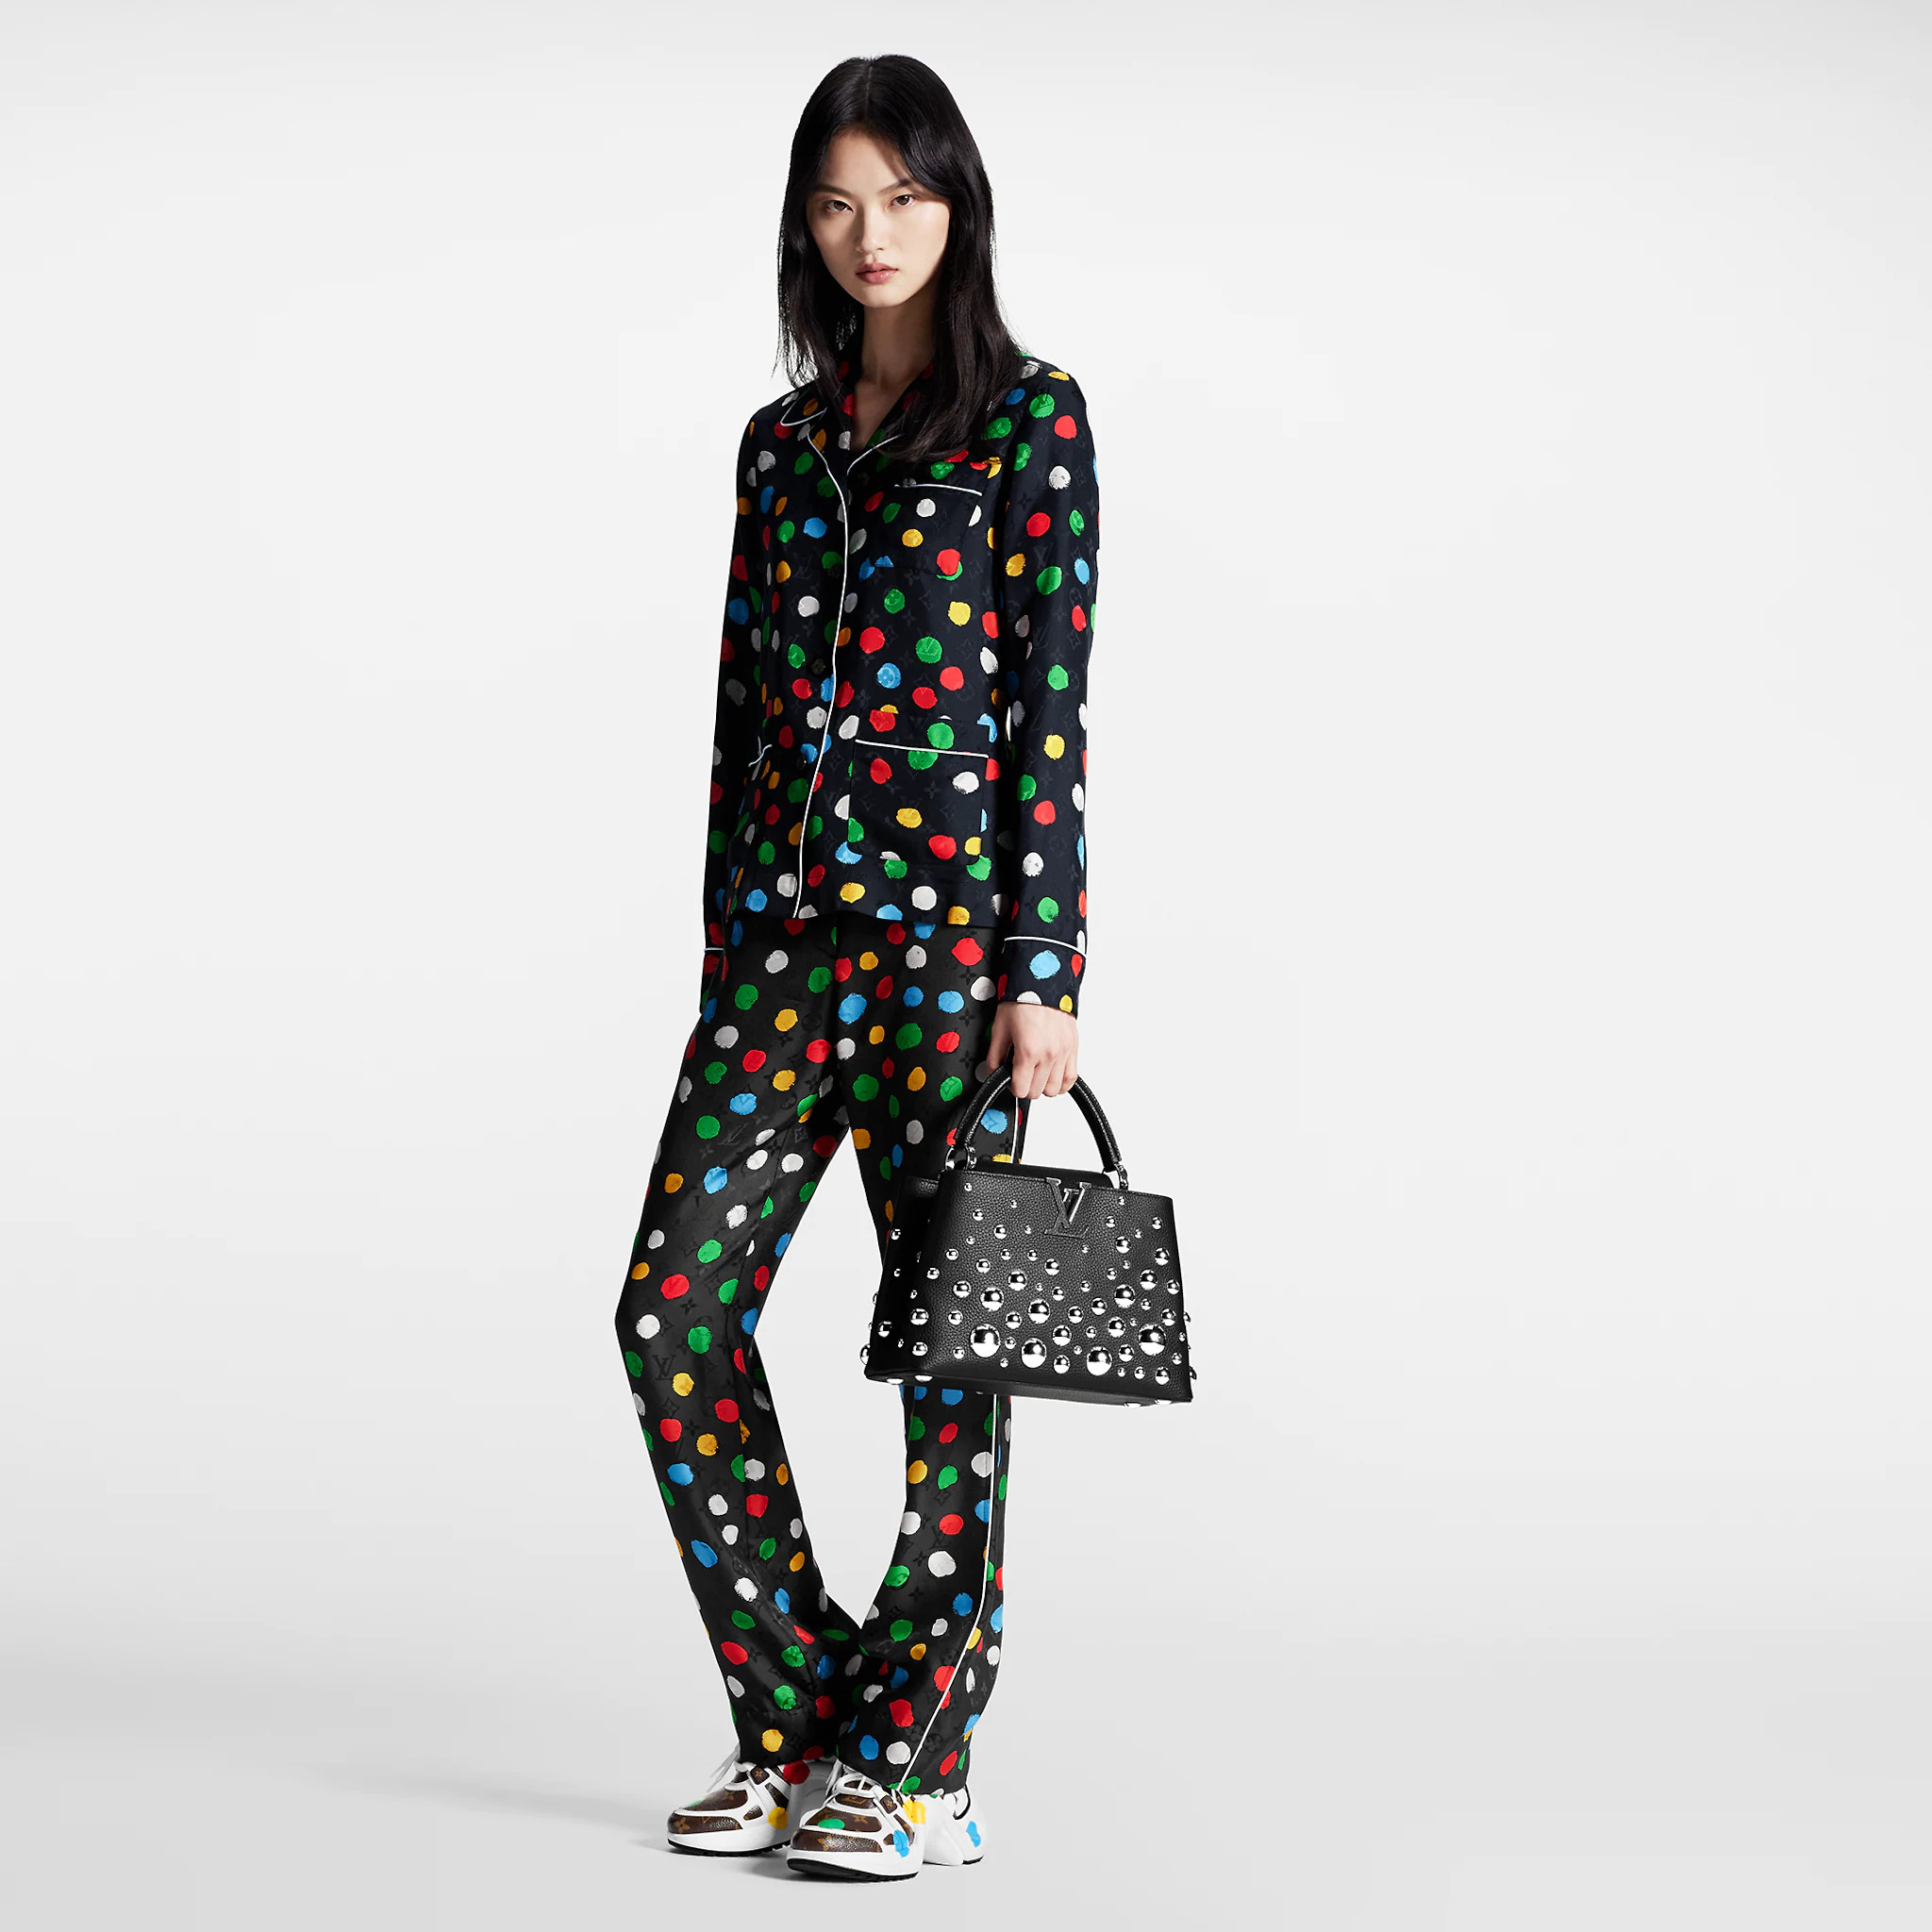 Louis Vuitton Pyjama - 3 For Sale on 1stDibs  louis vuitton pajamas for  sale, pijama louis vuitton, louis vuitton pyjamas